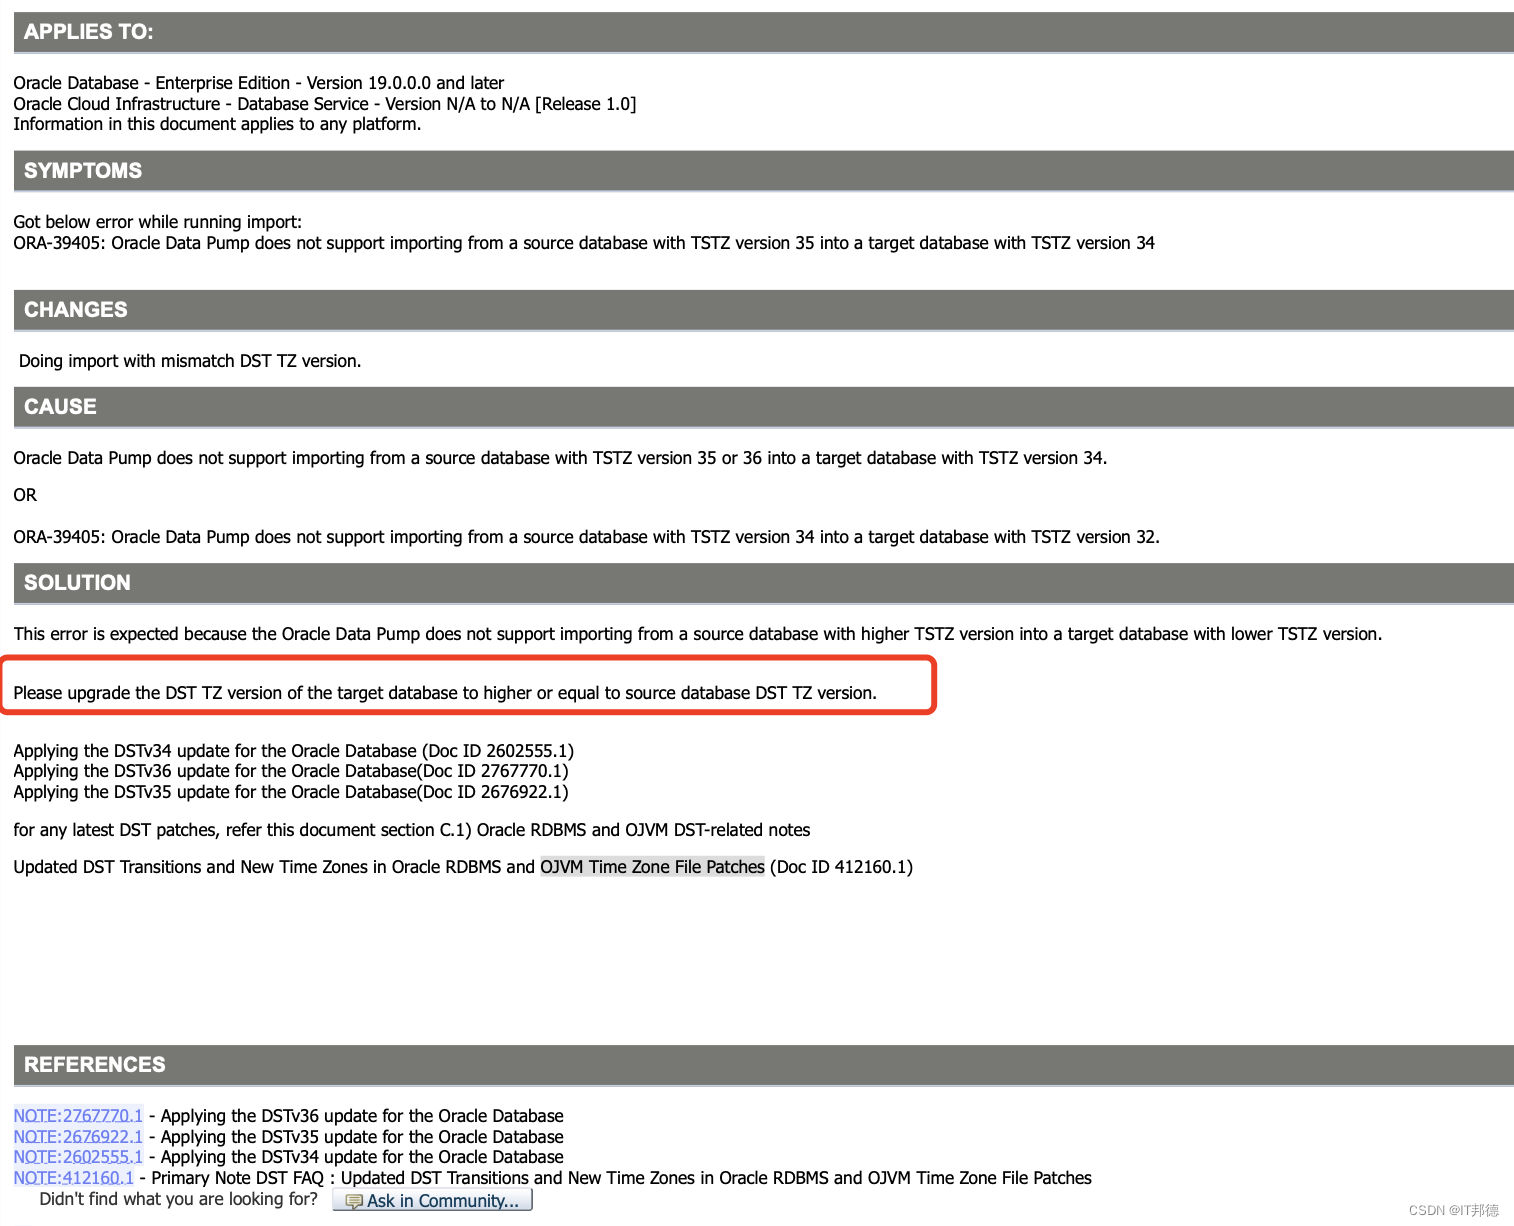 Oracle故障案例之-19C时区补丁DSTV38更新_SQL